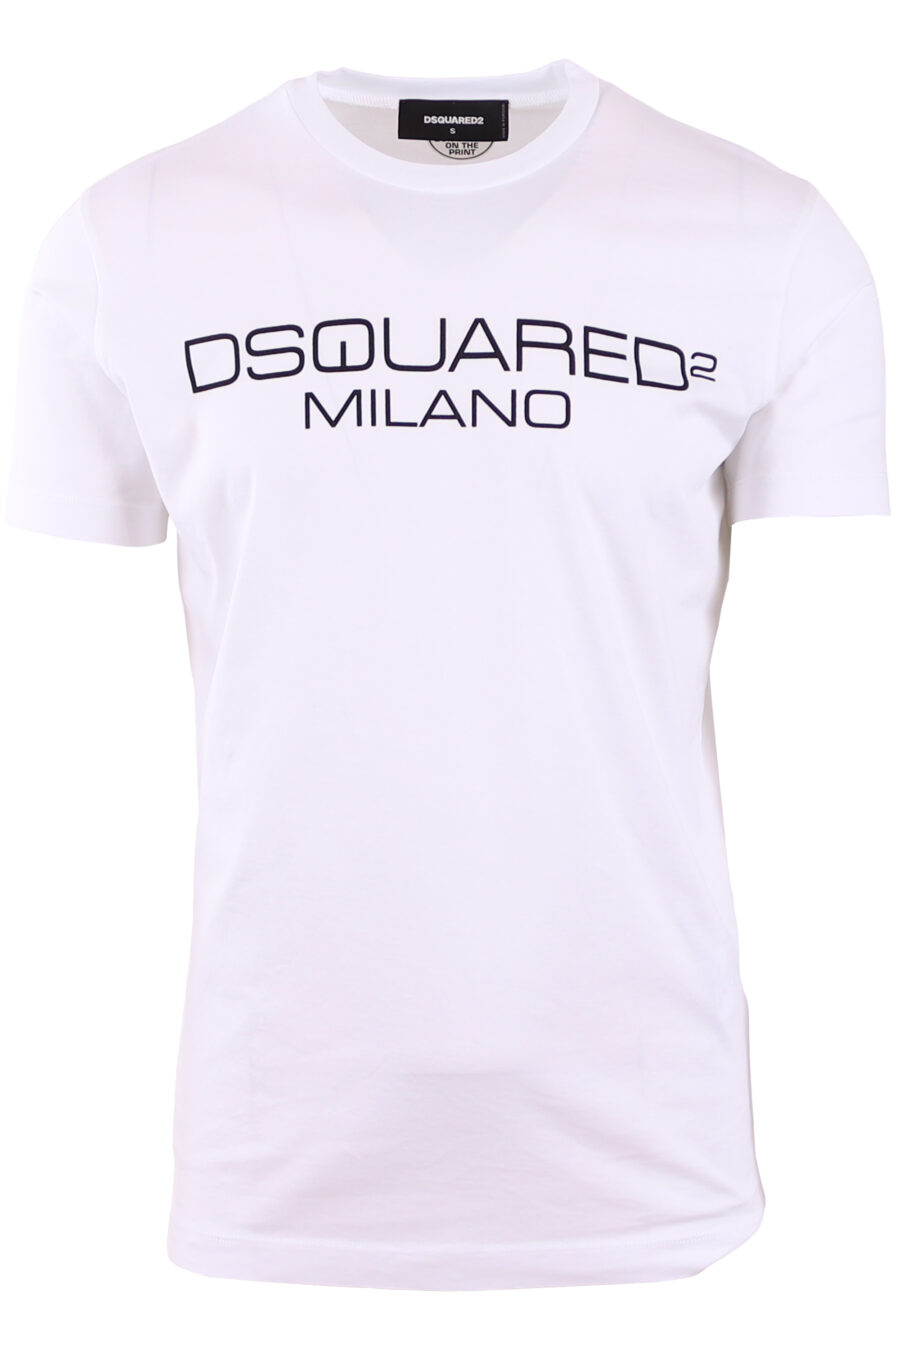 Camiseta blanca maxilogo "dsquared2 milano" - IMG 3569 1